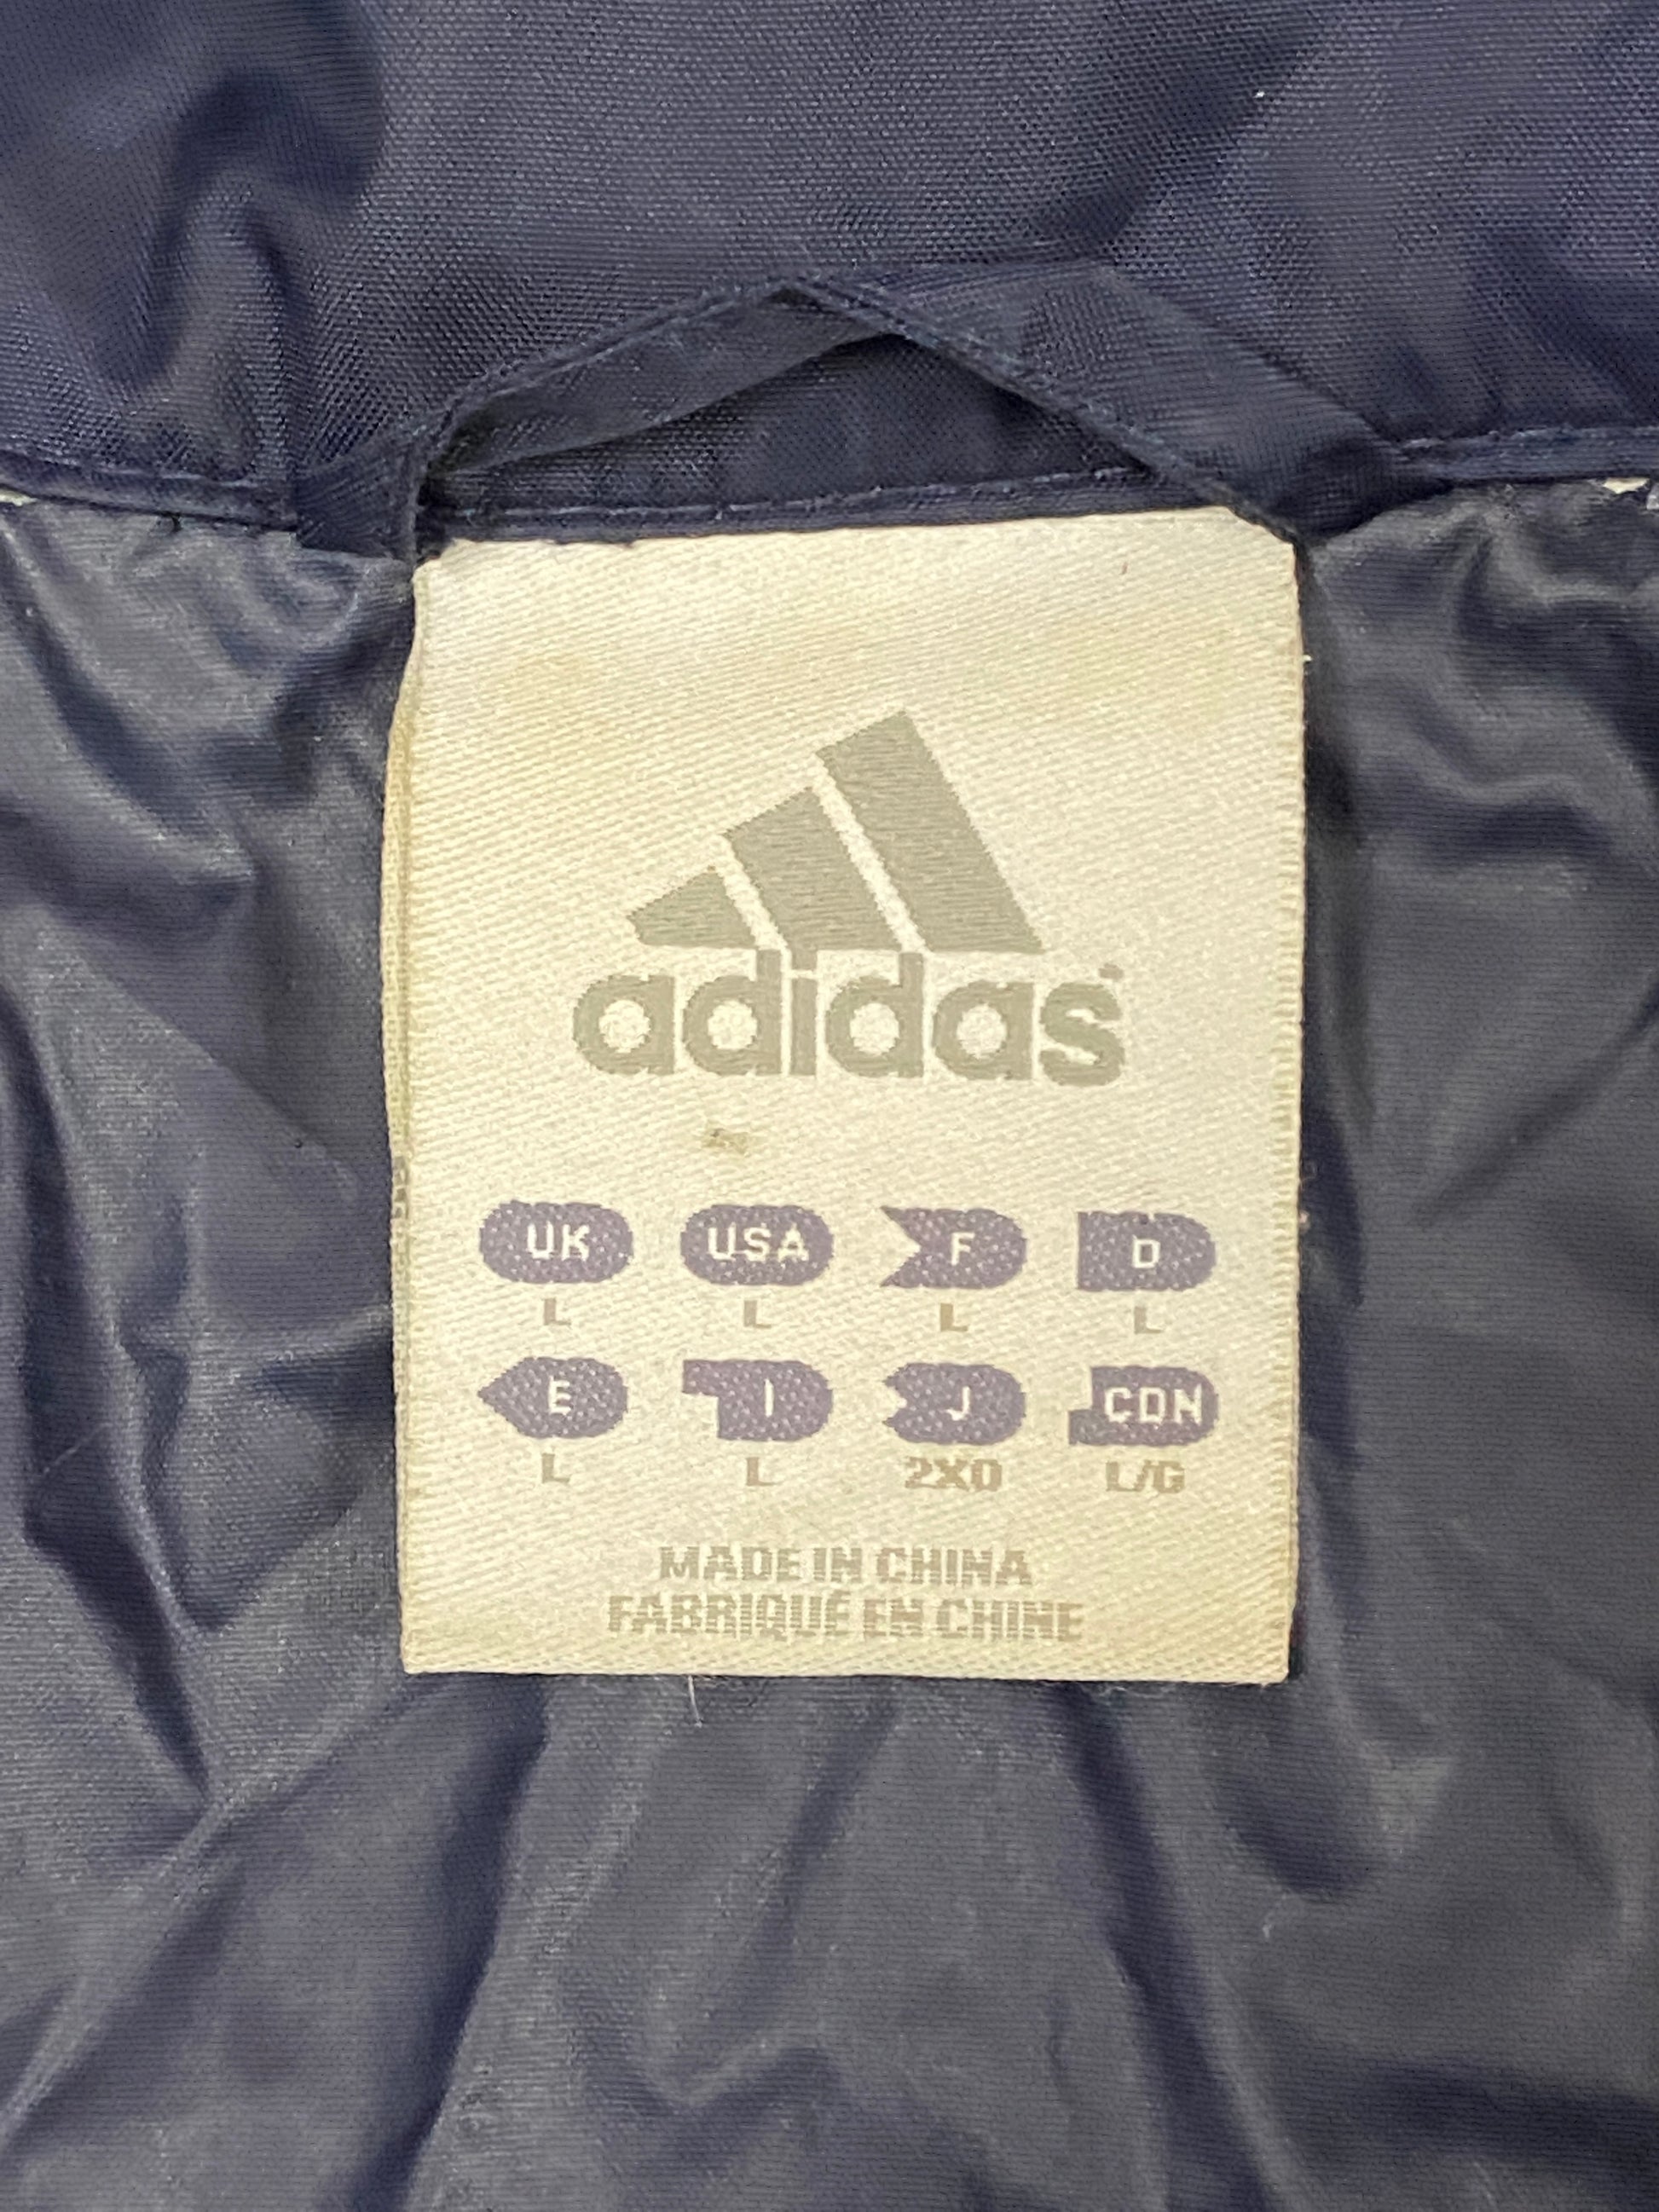 Adidas Vintage Men's Rain Jacket - Large Navy Blue Nylon